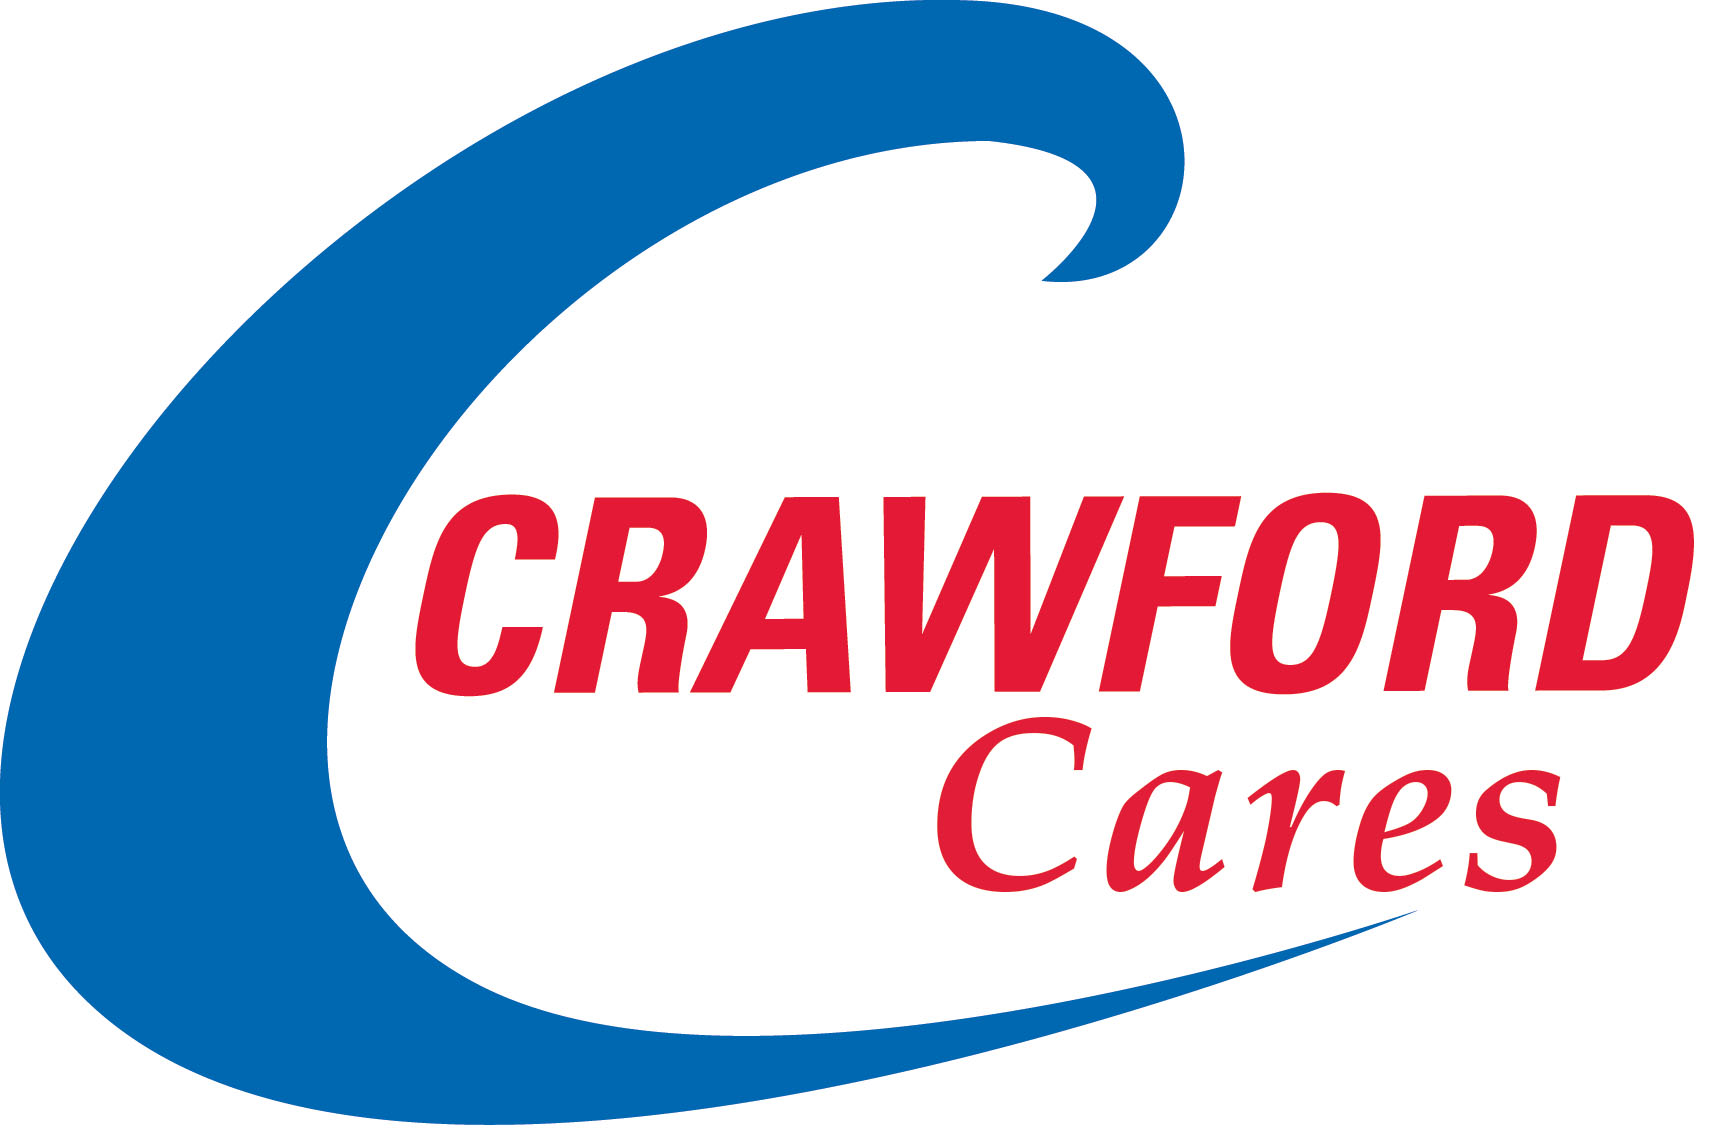 Crawford cares logo full color